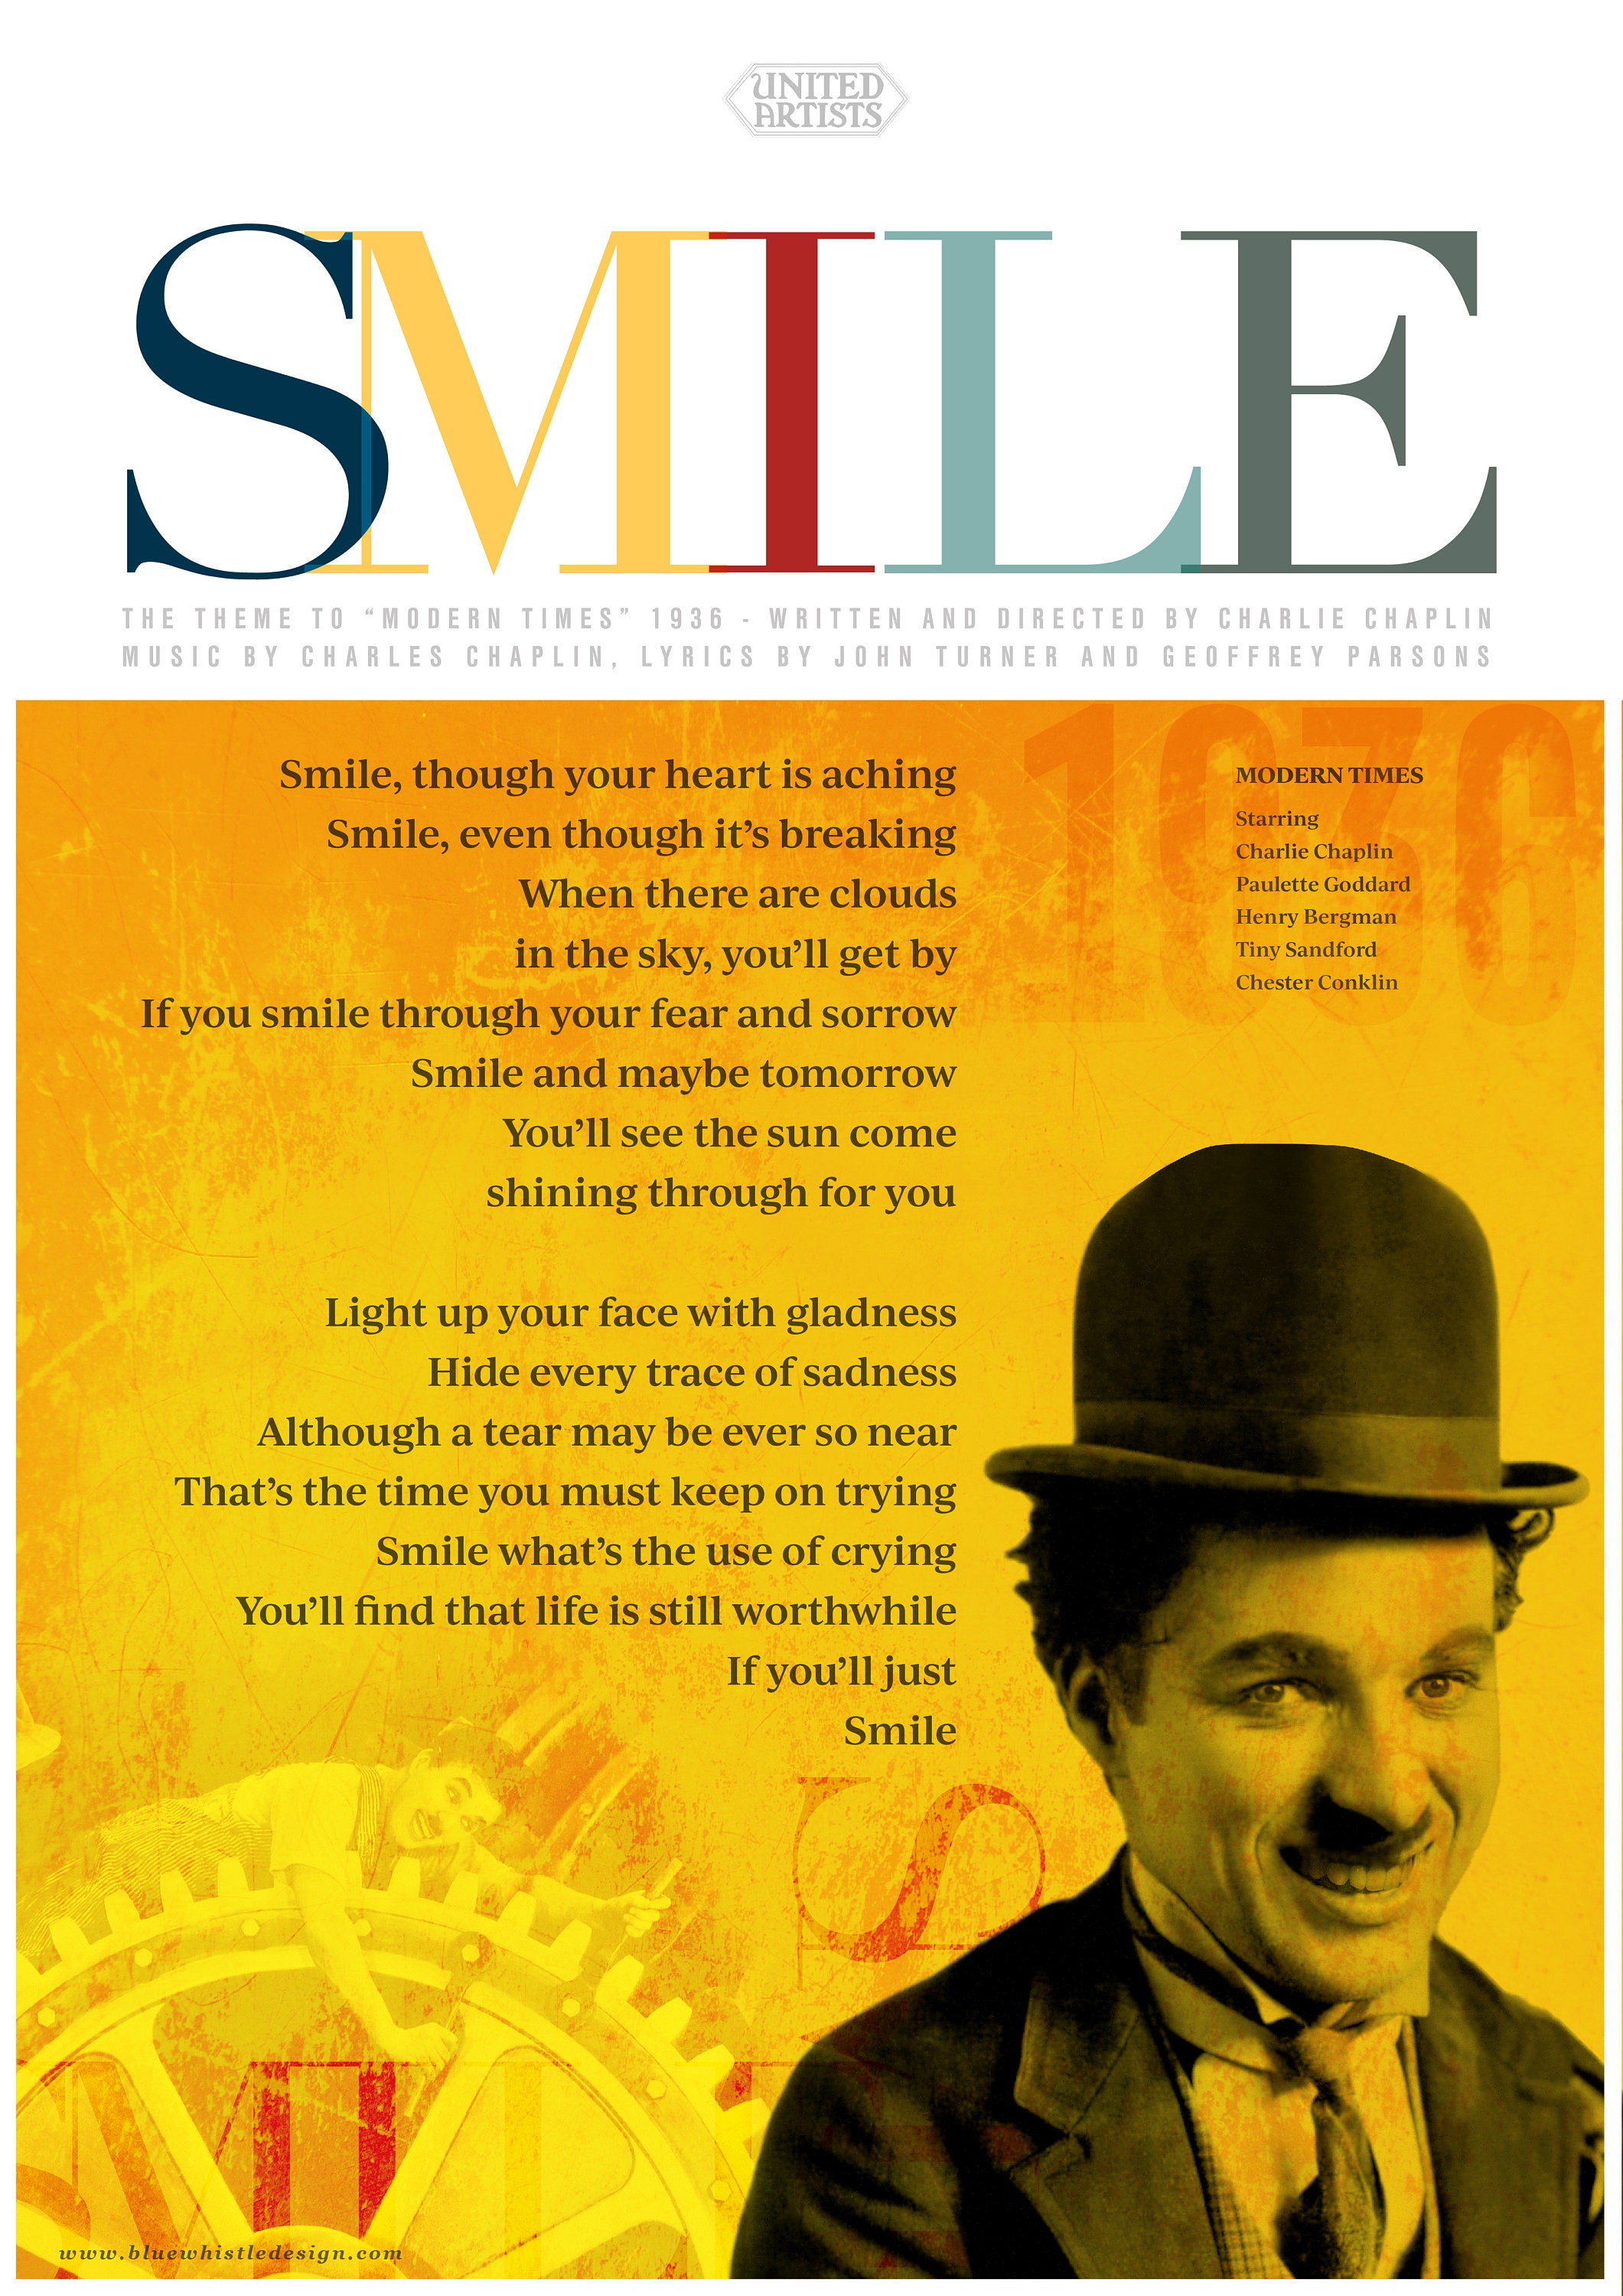 Charlie Chaplin SMILE lyrics A3 Art poster print | Etsy